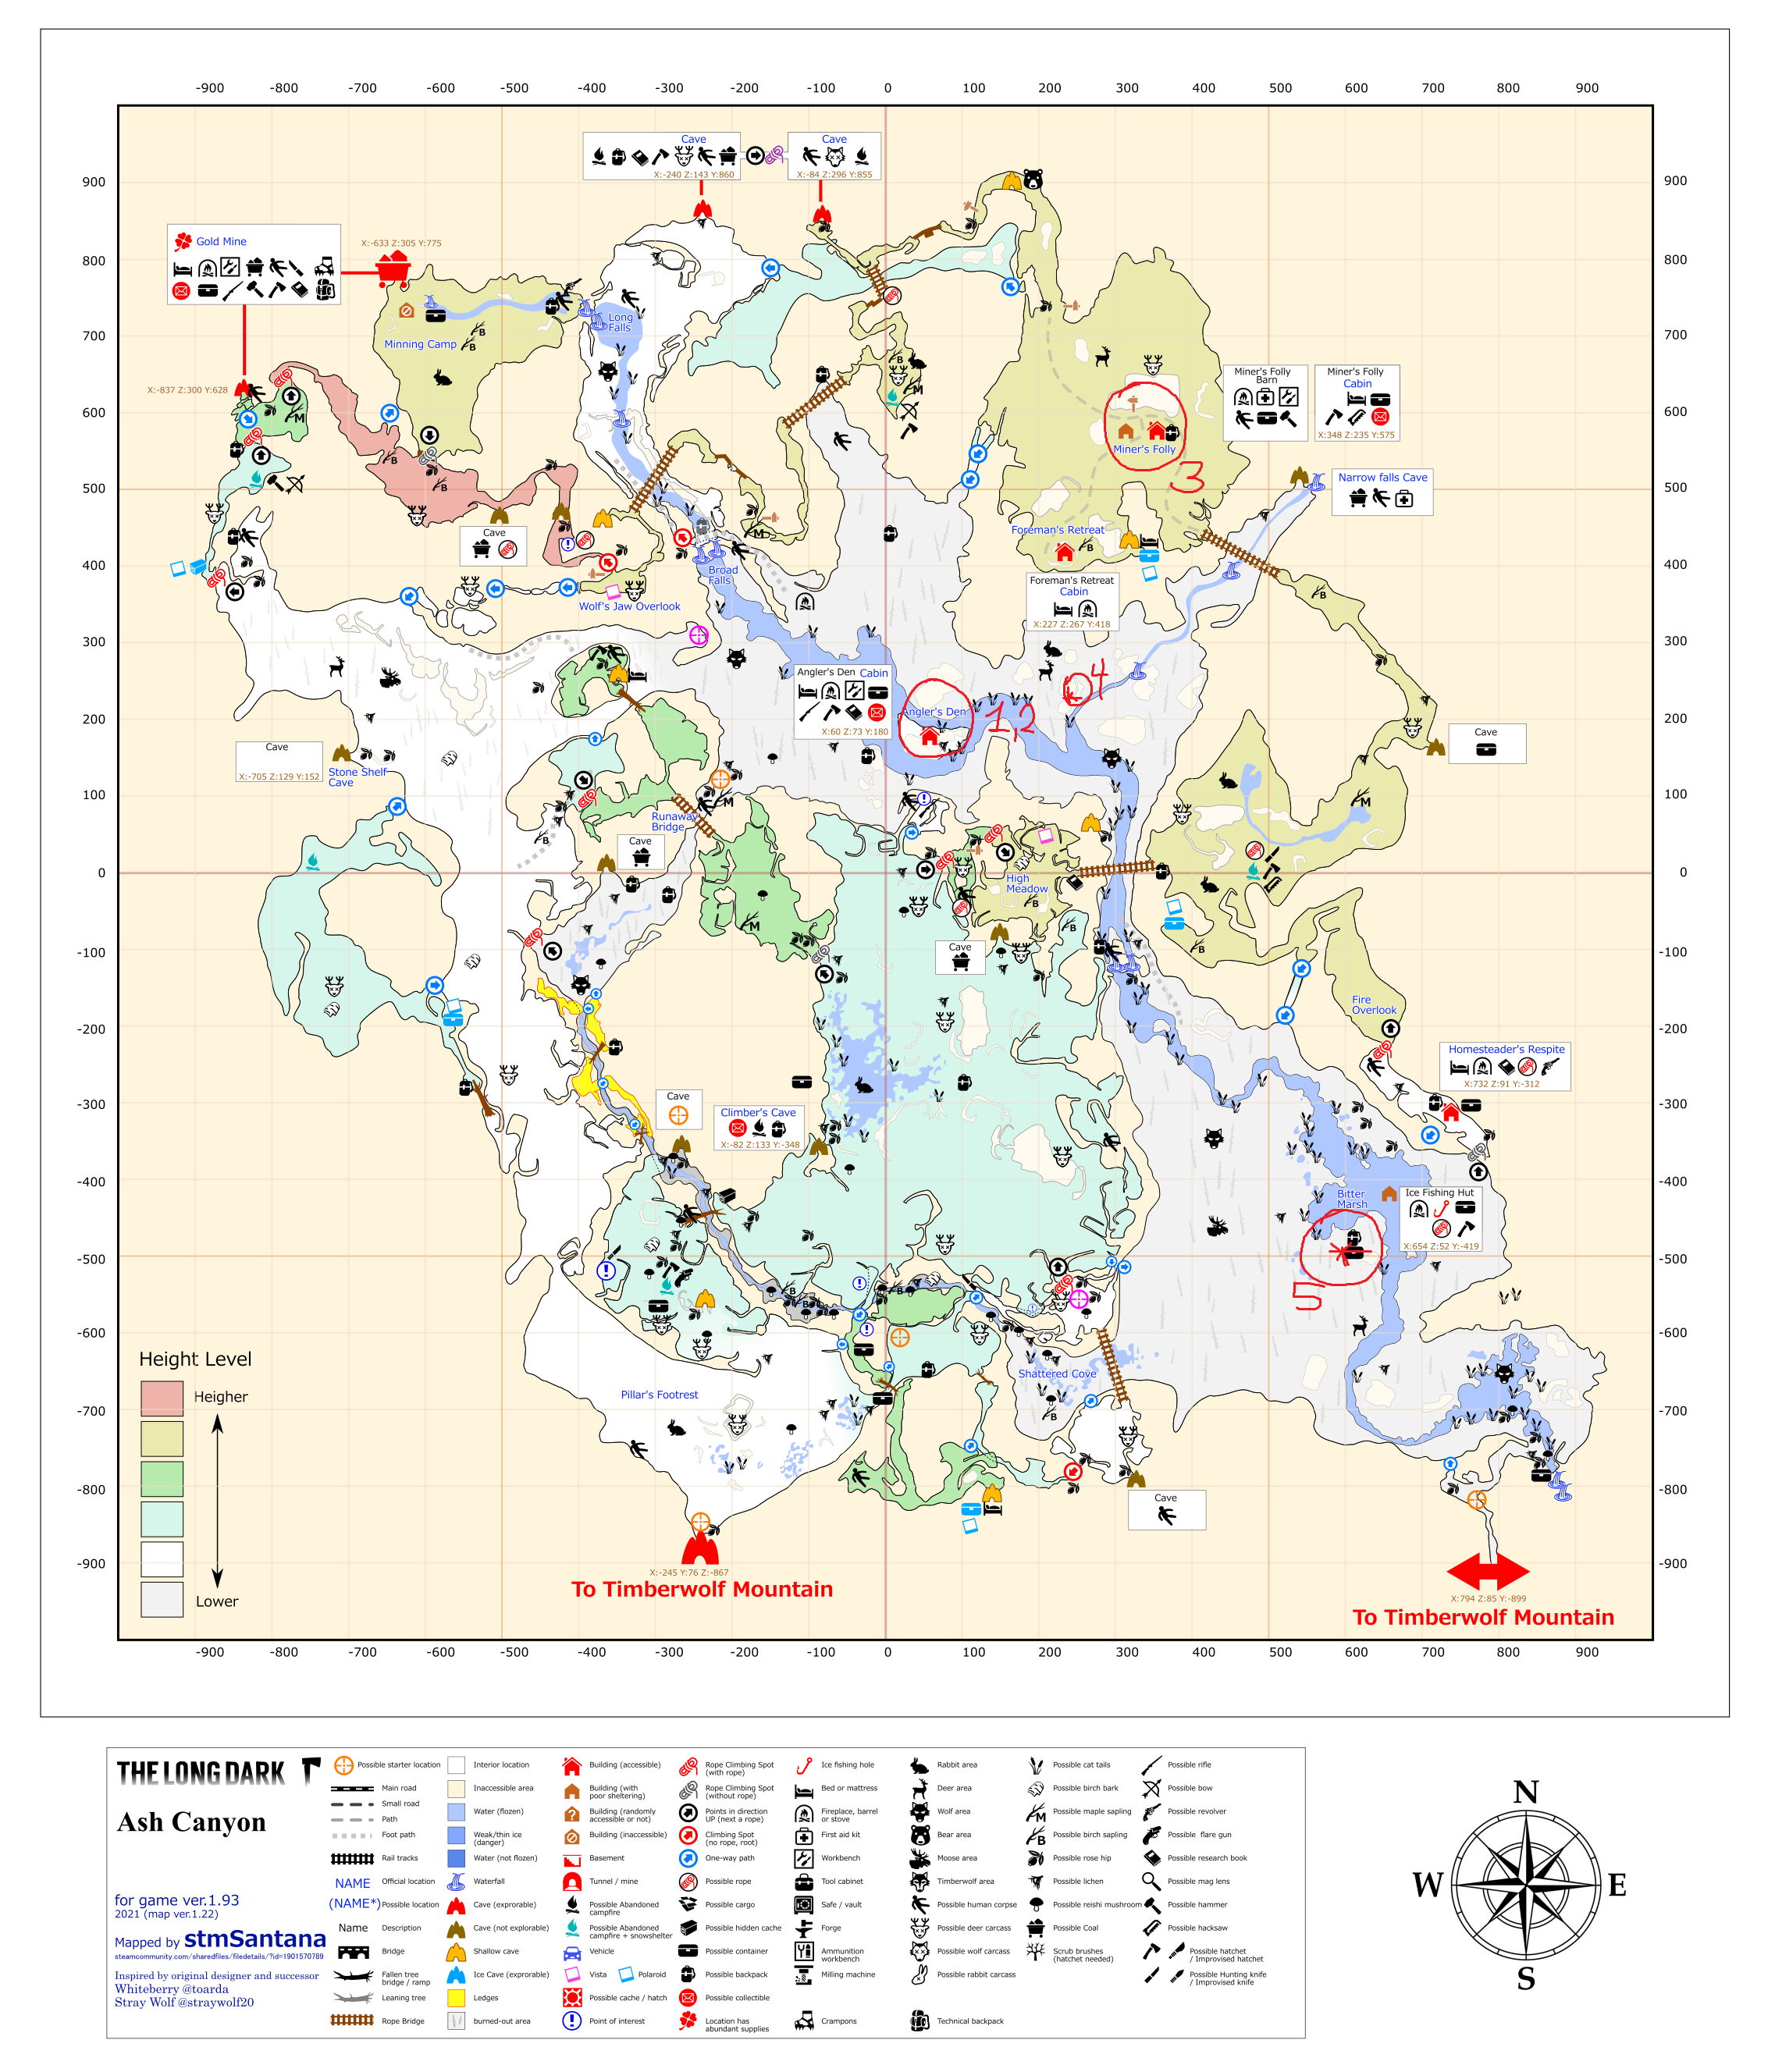 The Long Dark - Advanced rock cache placing + Top 5 caches per region - 6-Ash Canyon - 2C9EB20